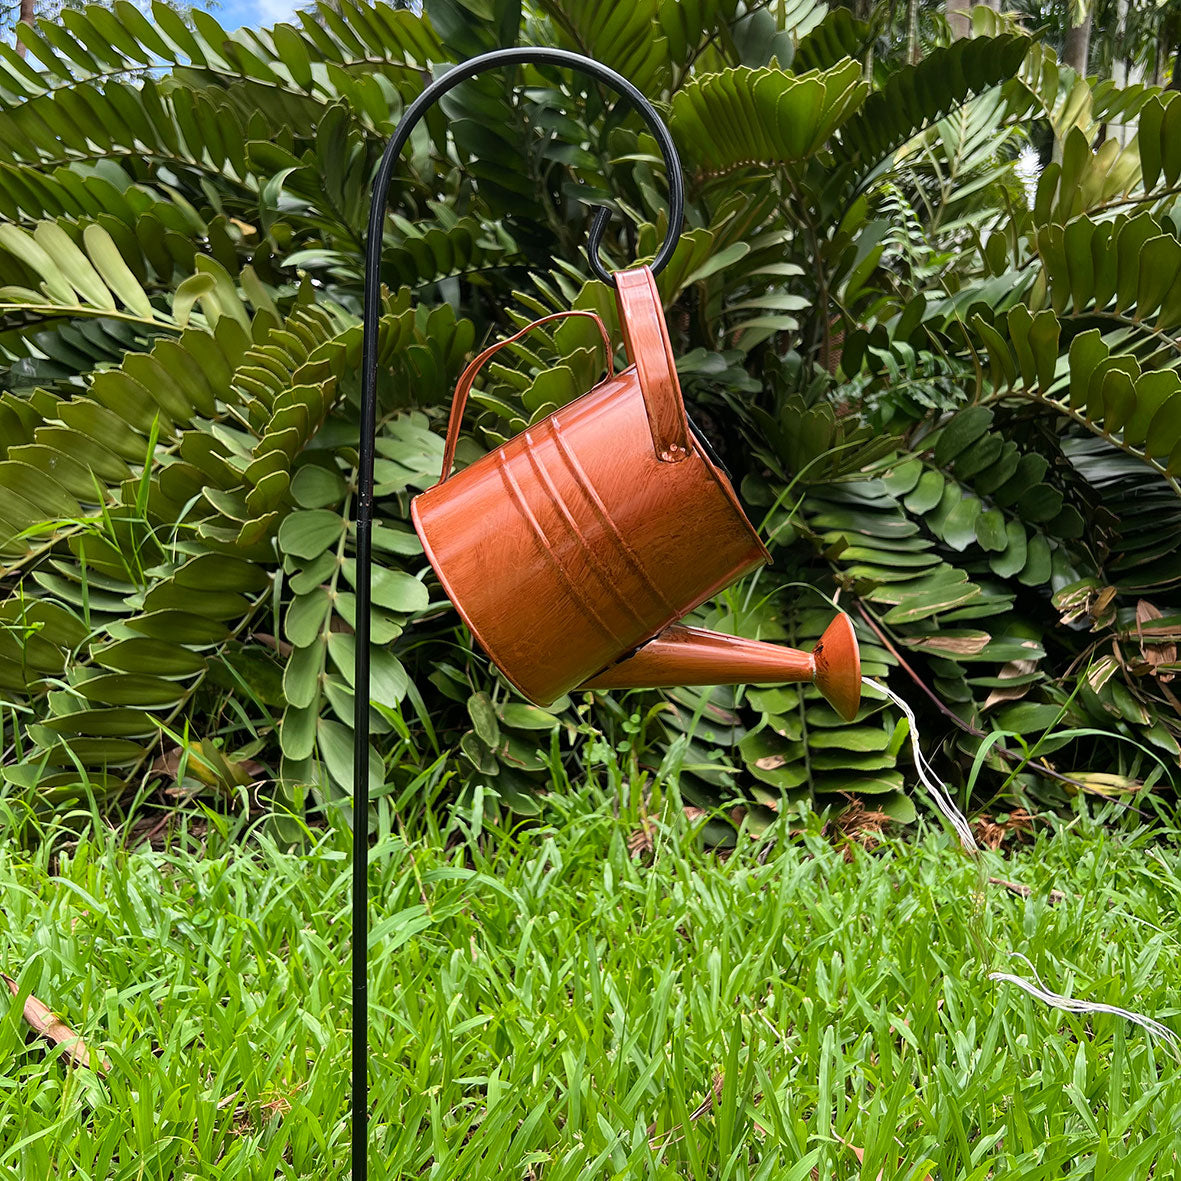 LED Watering Can Fairy Light Home Décor For Garden, Patio, Backyard